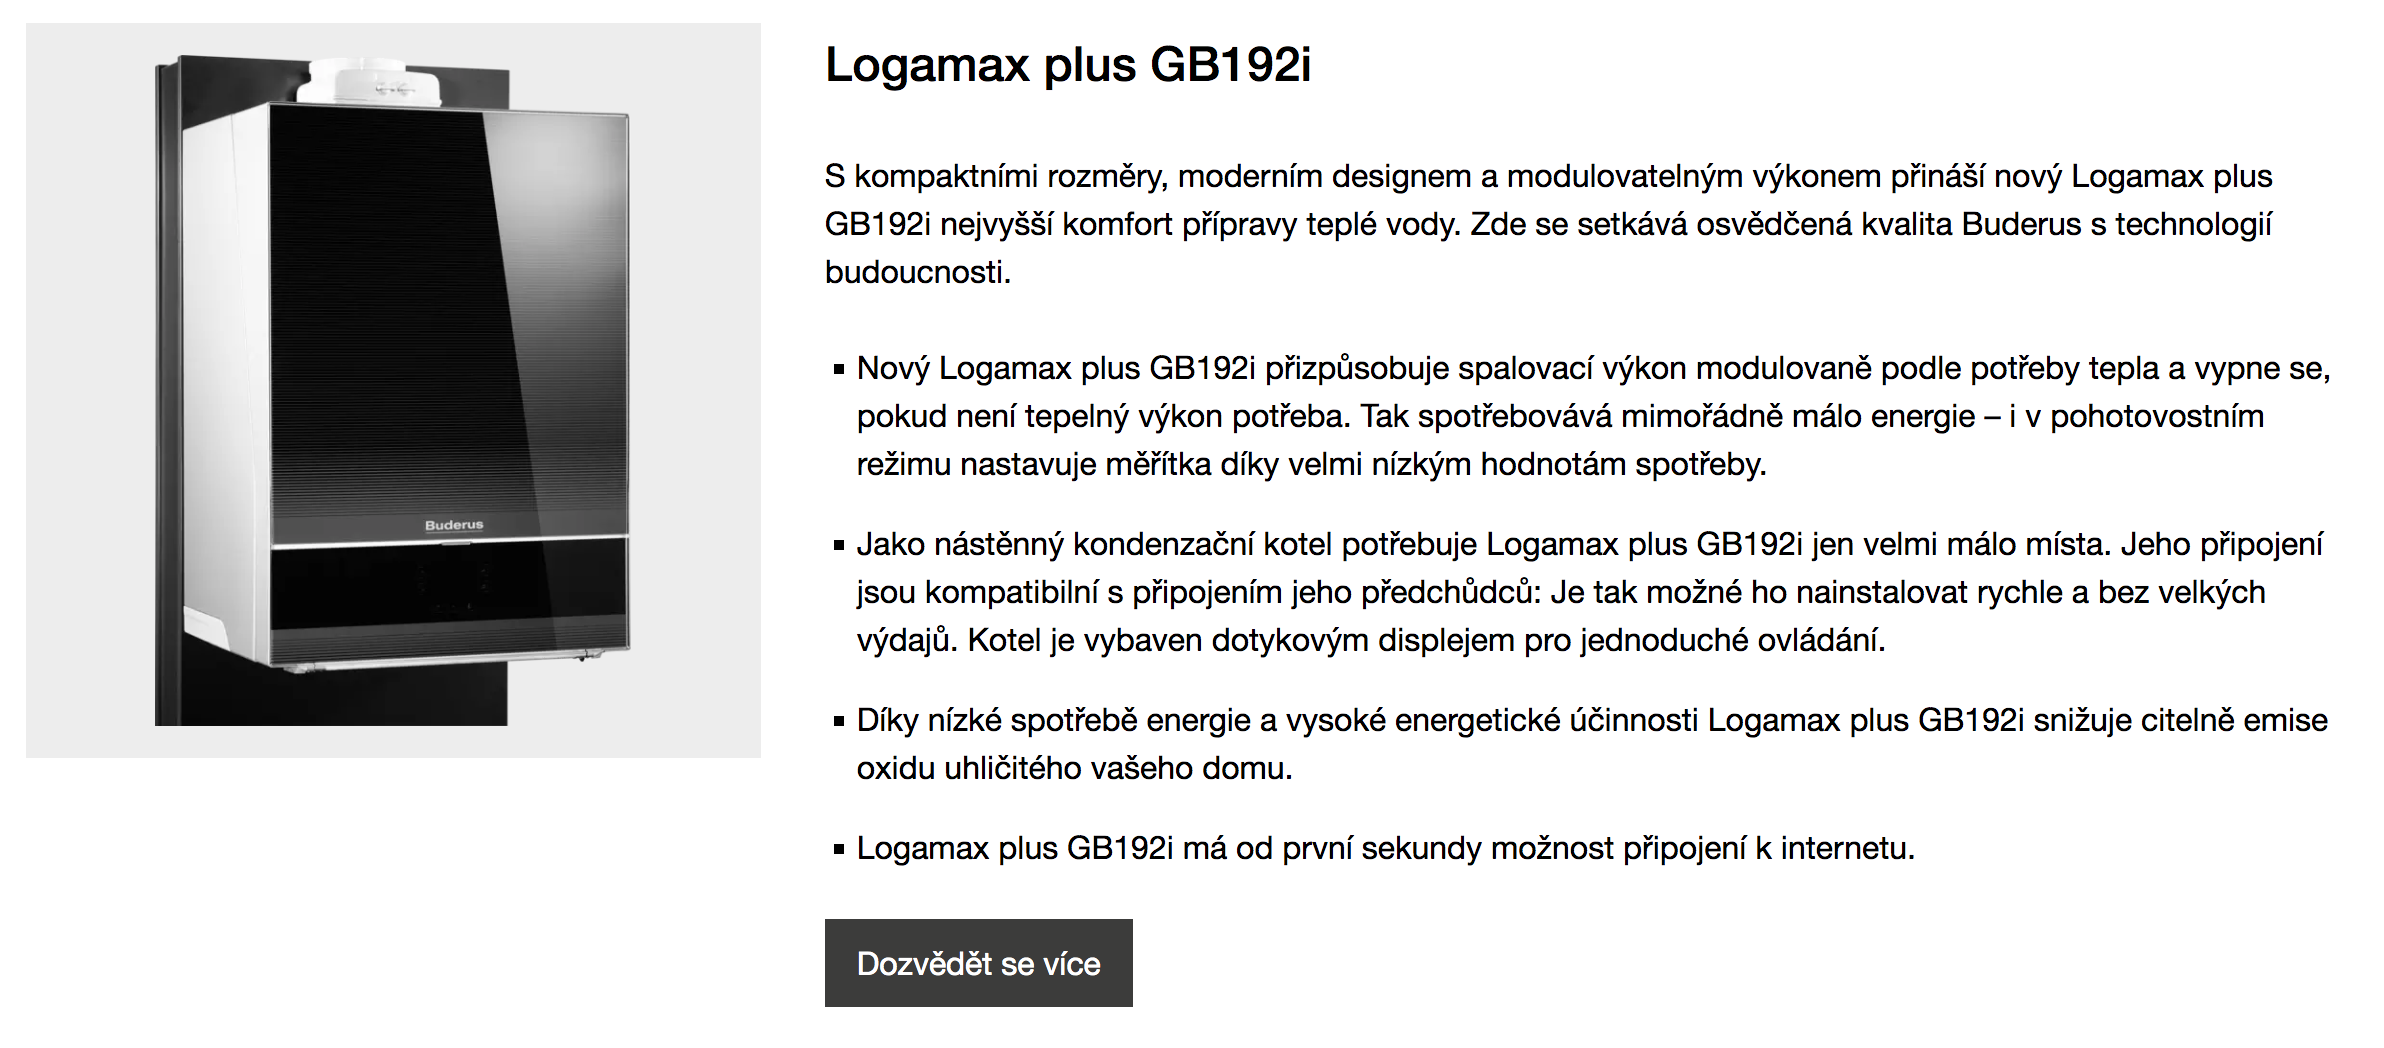 LogamaxPlus_GB192i